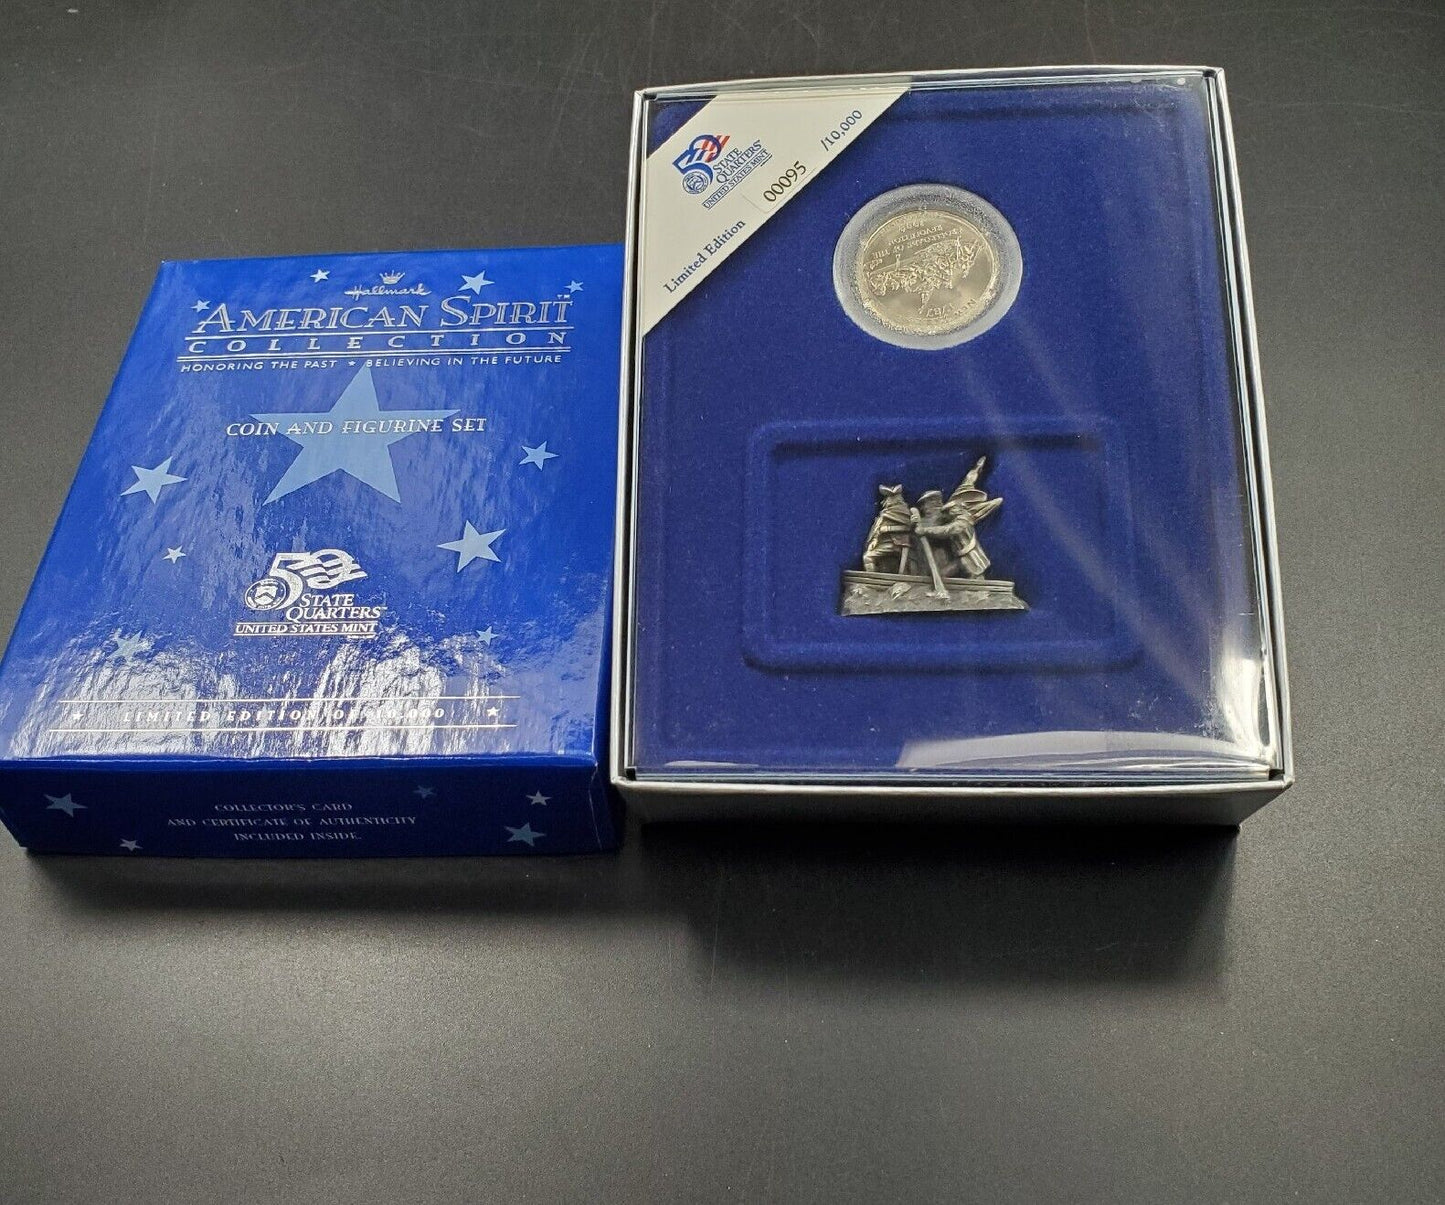 1999 New Jersey State Quarter American Spirit Coin & Figurine Set in Box